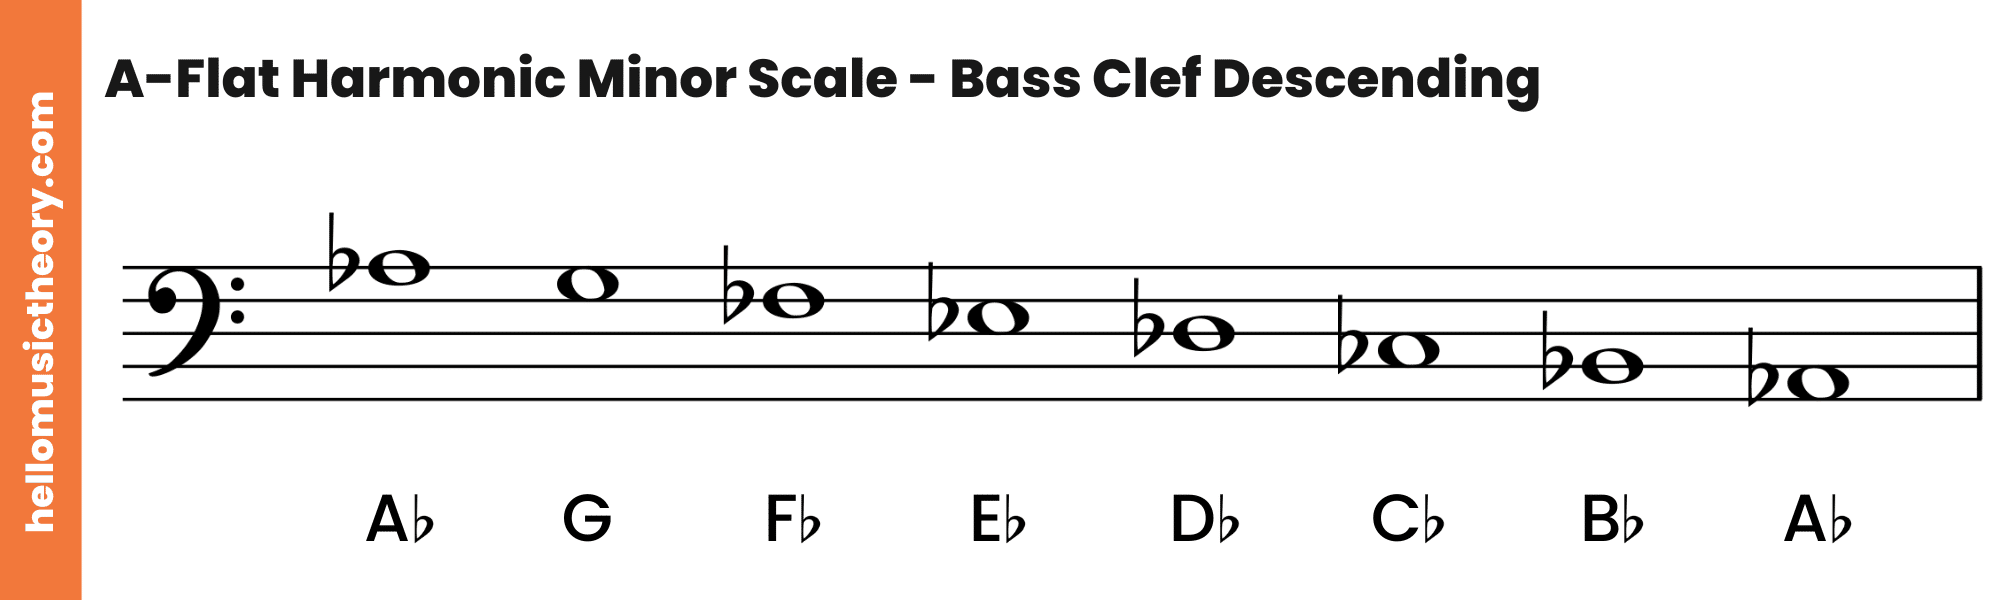 A-Flat Harmonic Minor Scale Bass Clef Descending